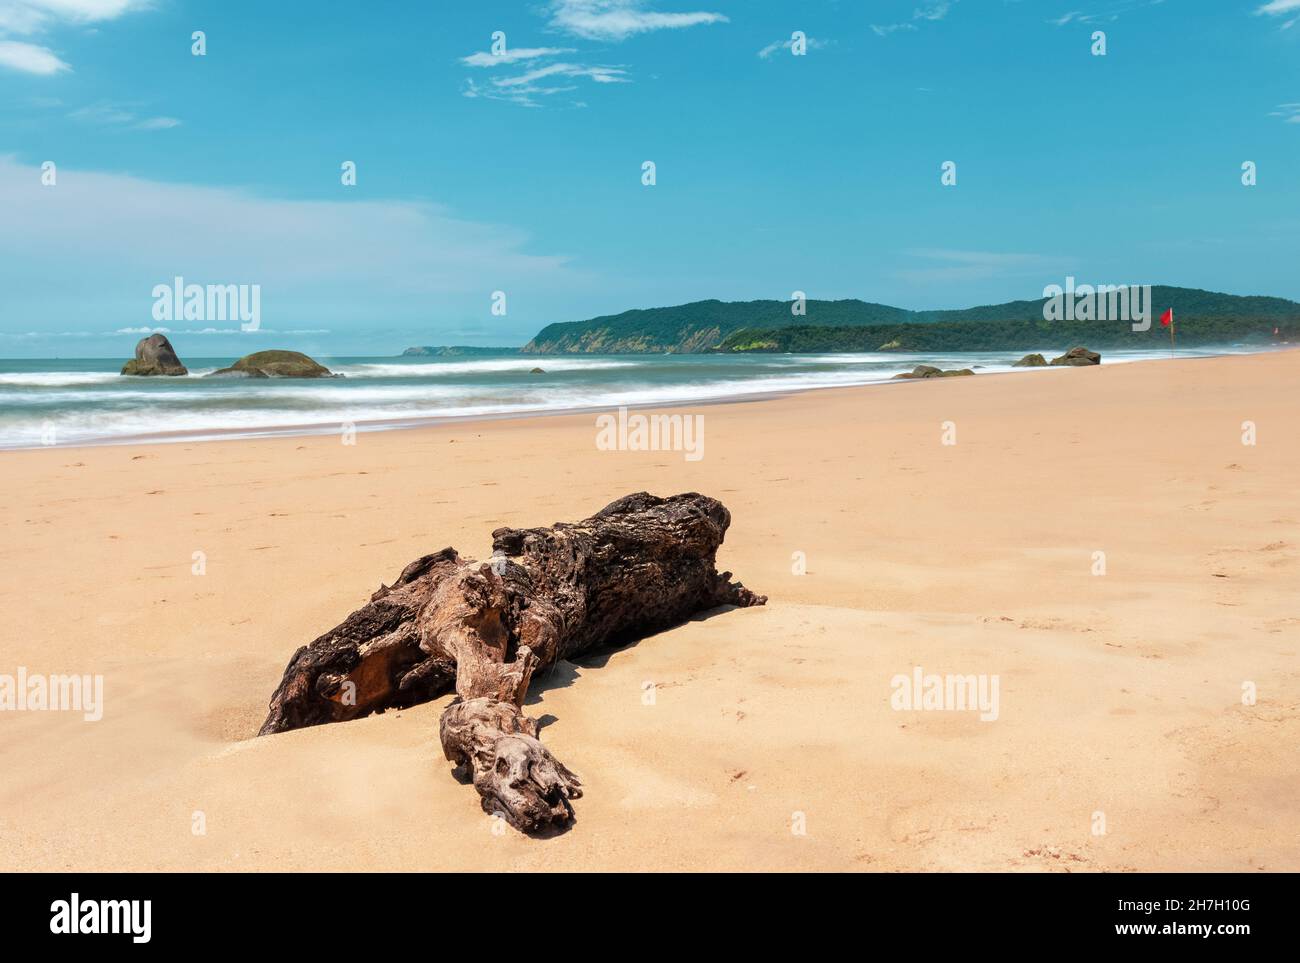 Wooden log on the shore - Agonda Beach - Goa, India Stock Photo